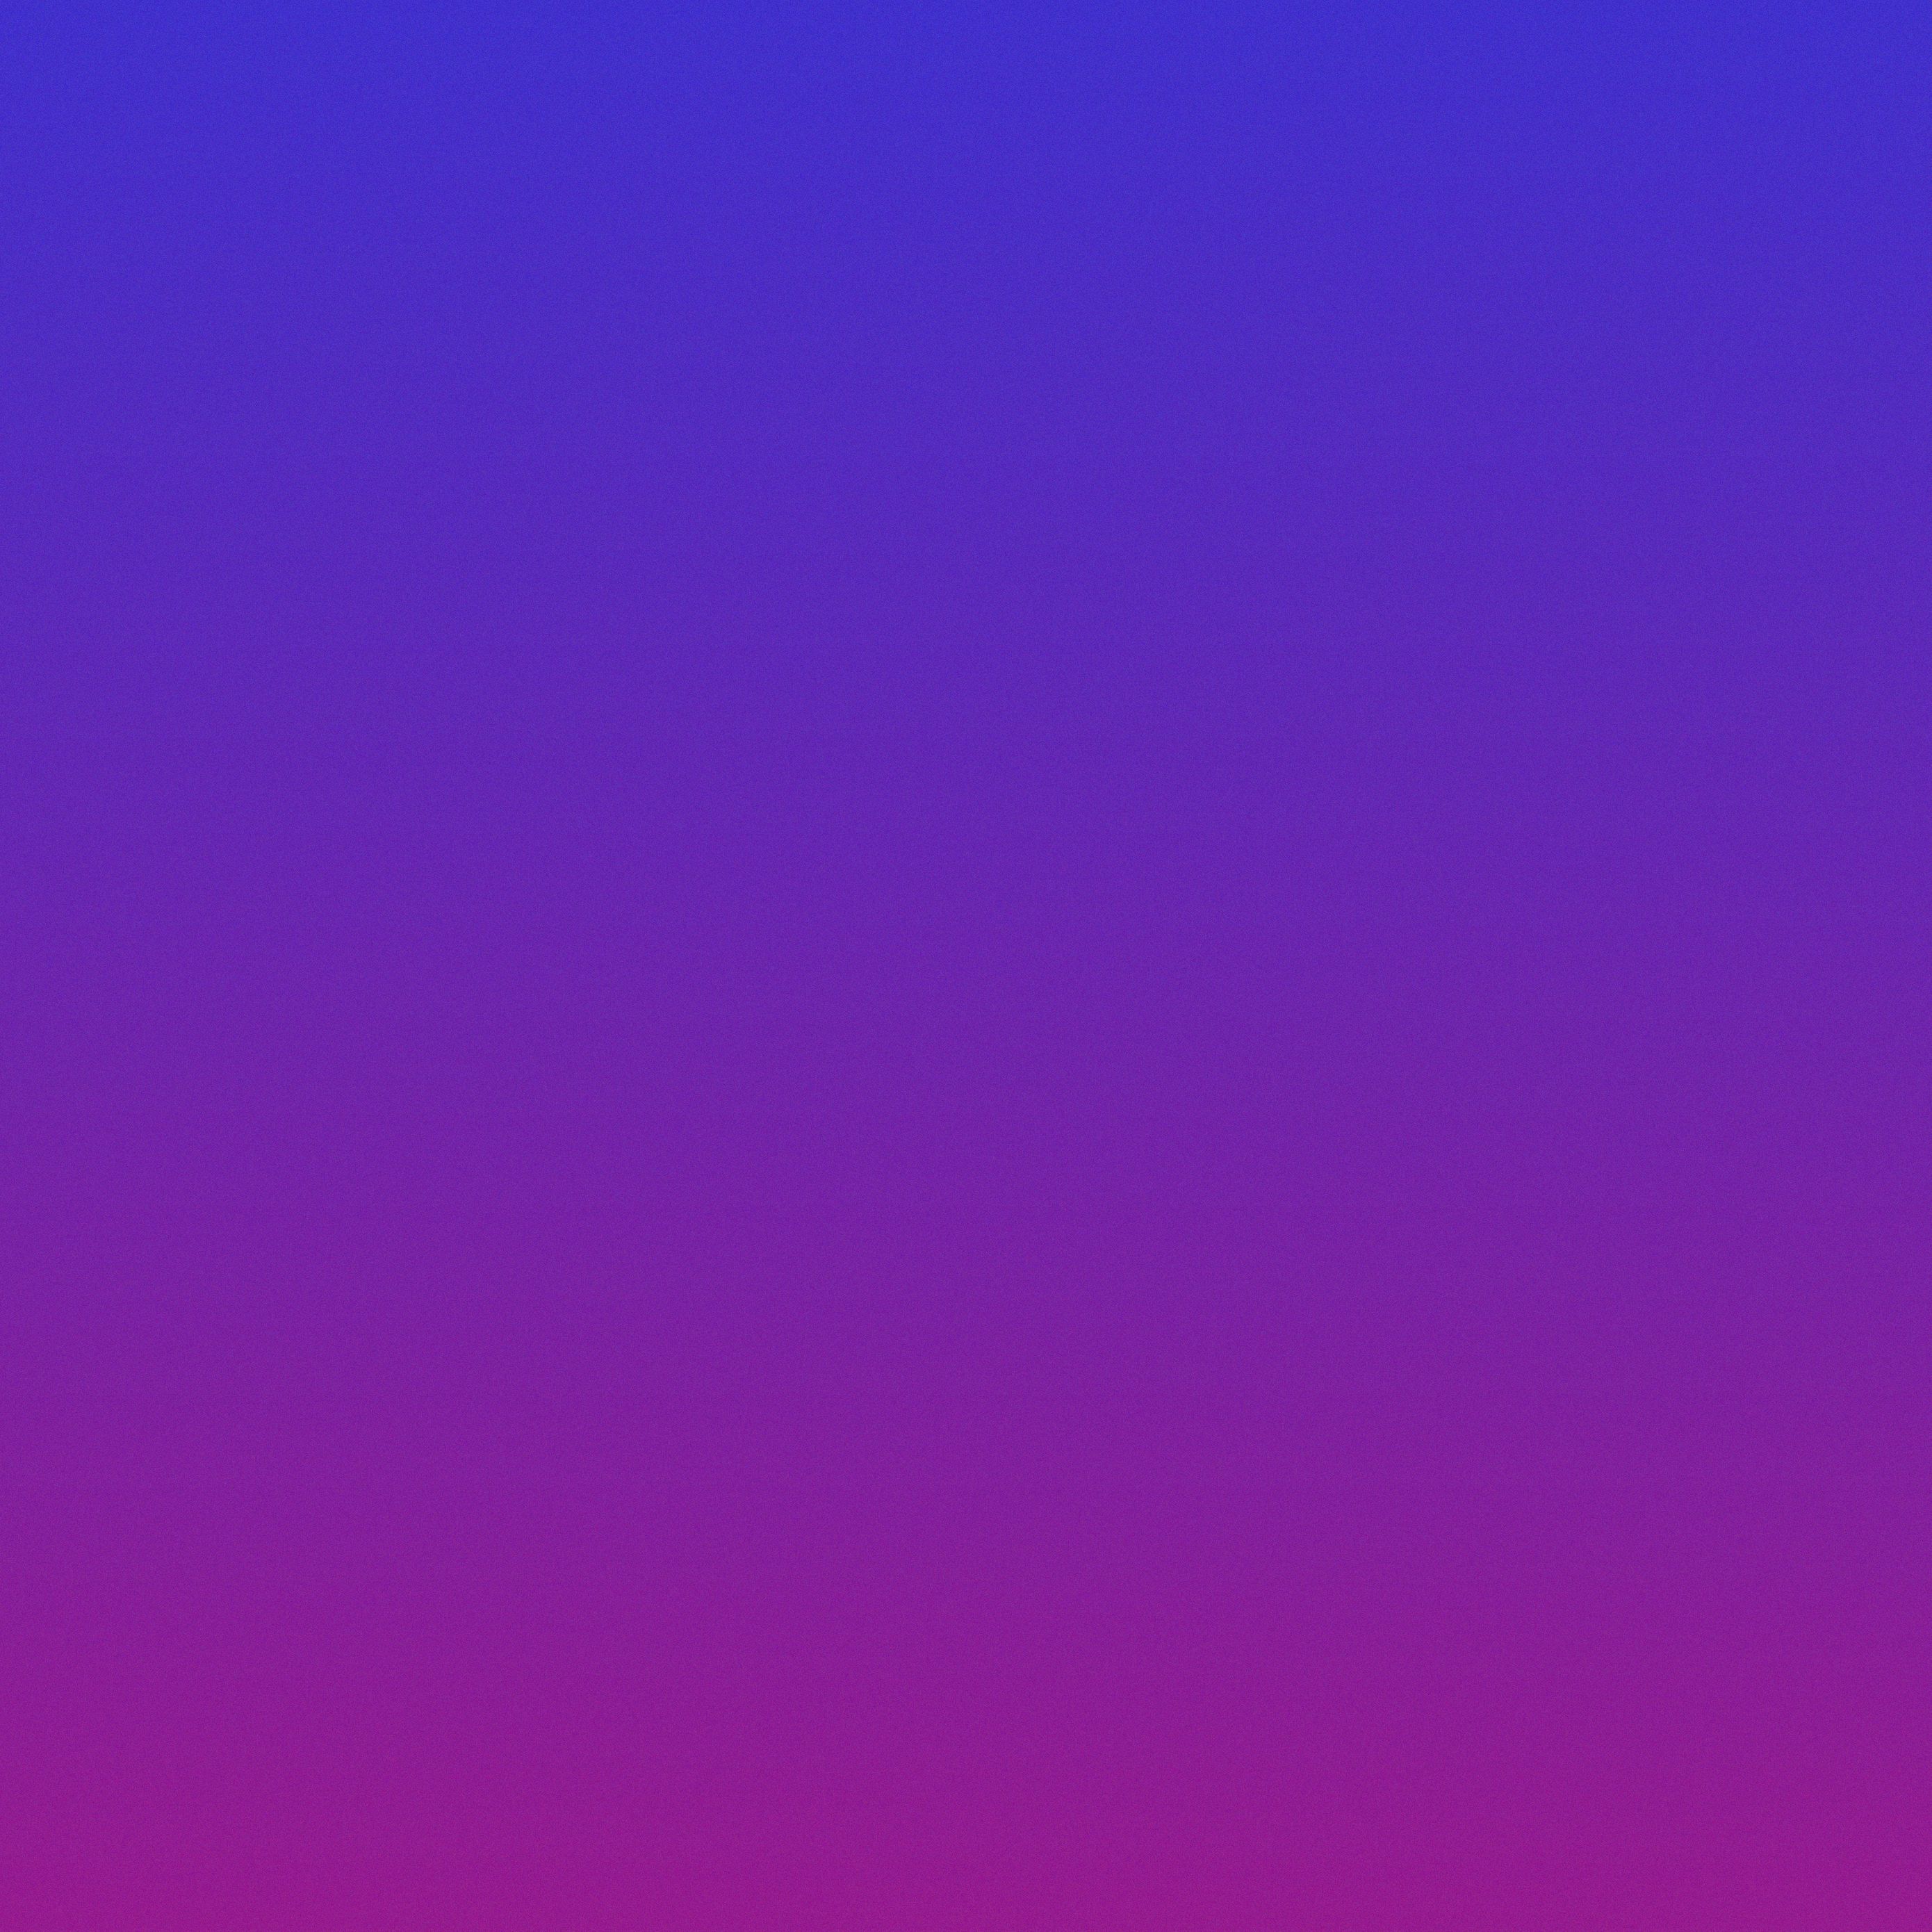 Download wallpaper 2780x2780 gradient, blue, purple, abstraction ipad air,  ipad air 2, ipad 3, ipad 4, ipad mini 2, ipad mini 3, ipad mini 4, ipad pro  